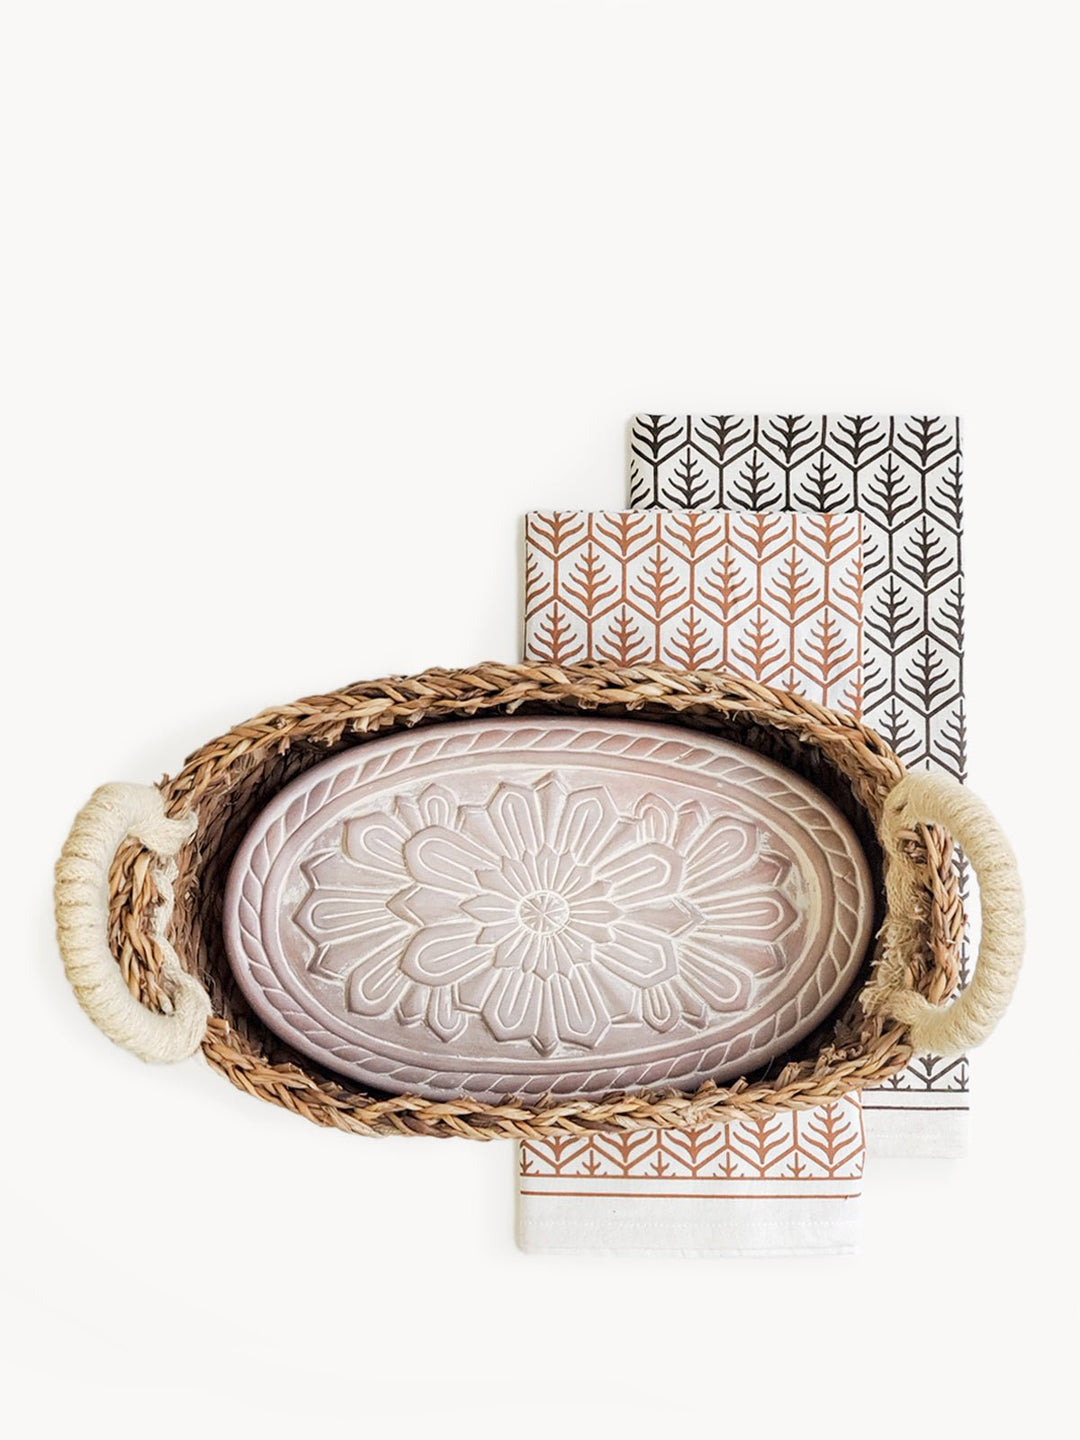 Bread Warmer & Basket Gift Set with Tea Towel - Flower - EcofiedHome